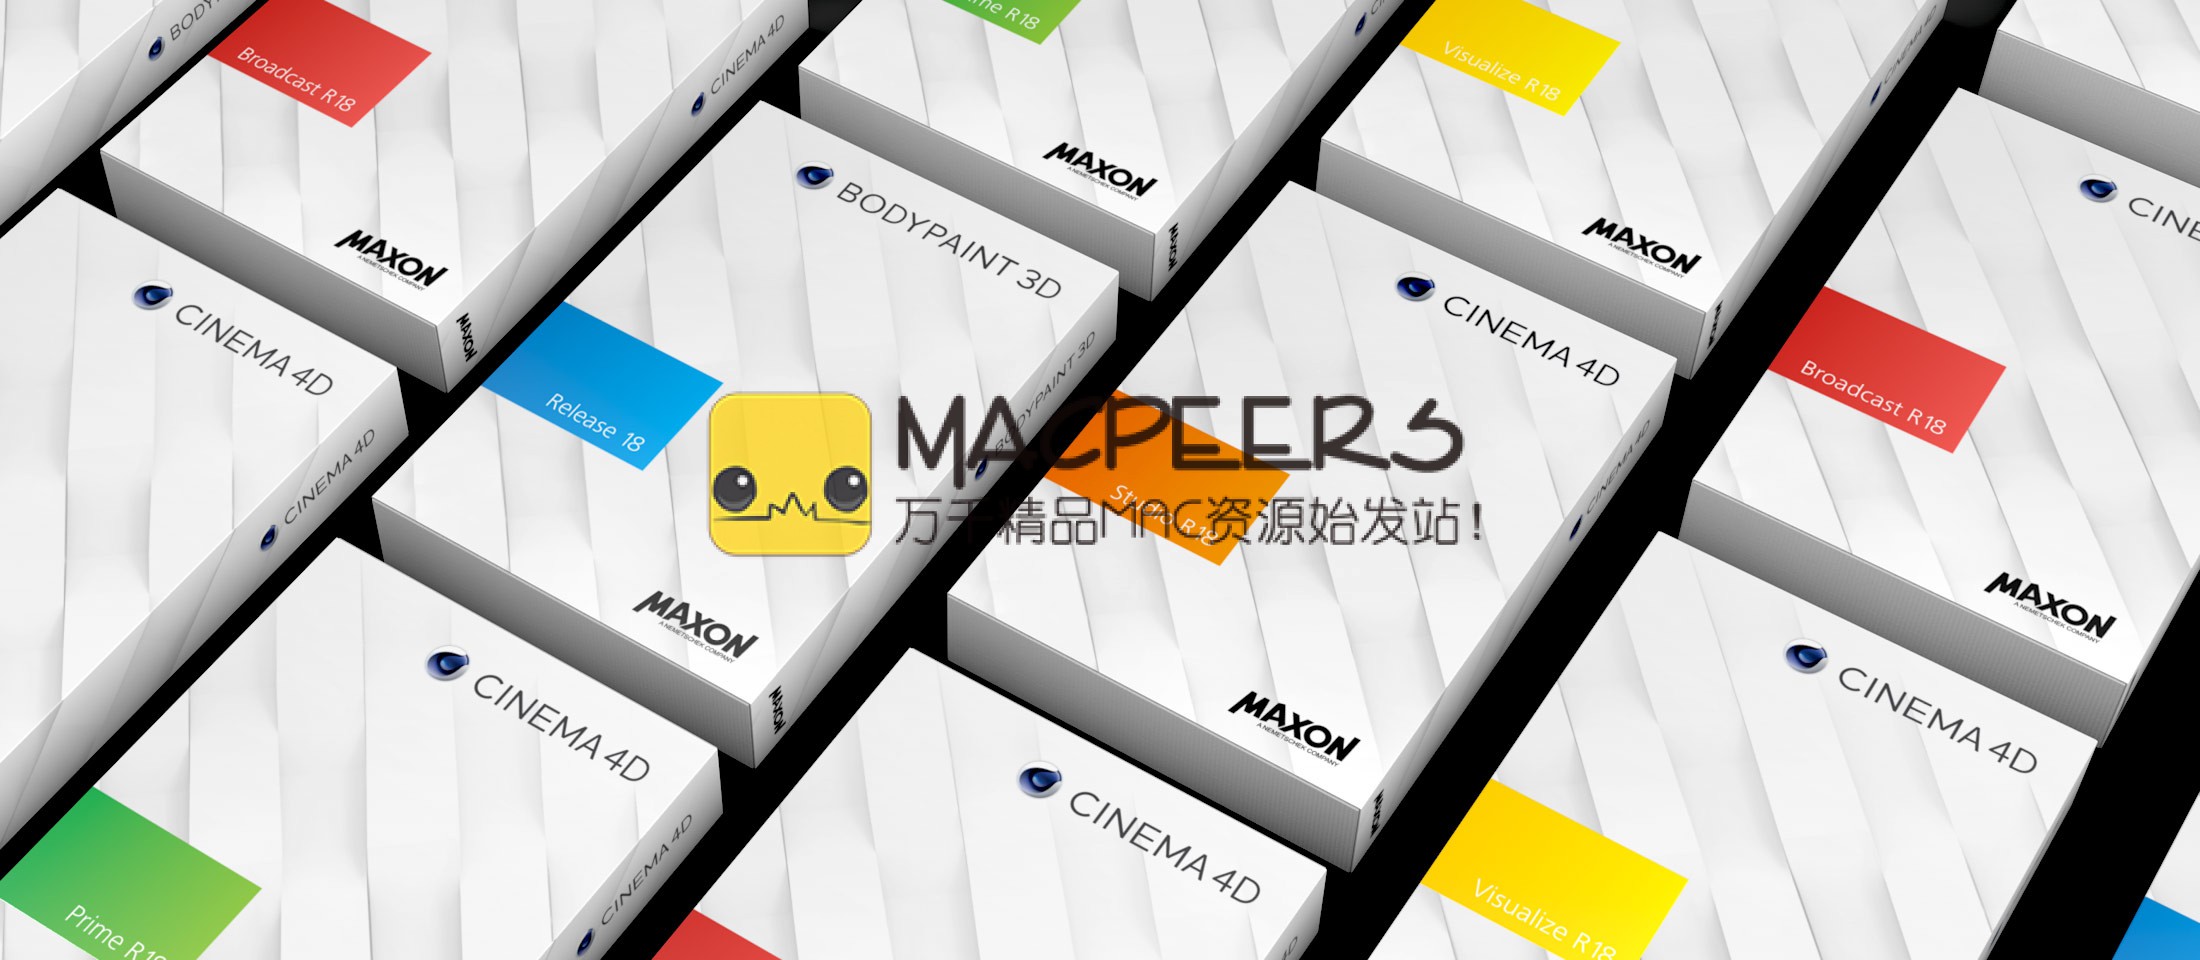 Maxon CINEMA 4D Studio  R18.028  mac/win 完整版 激活